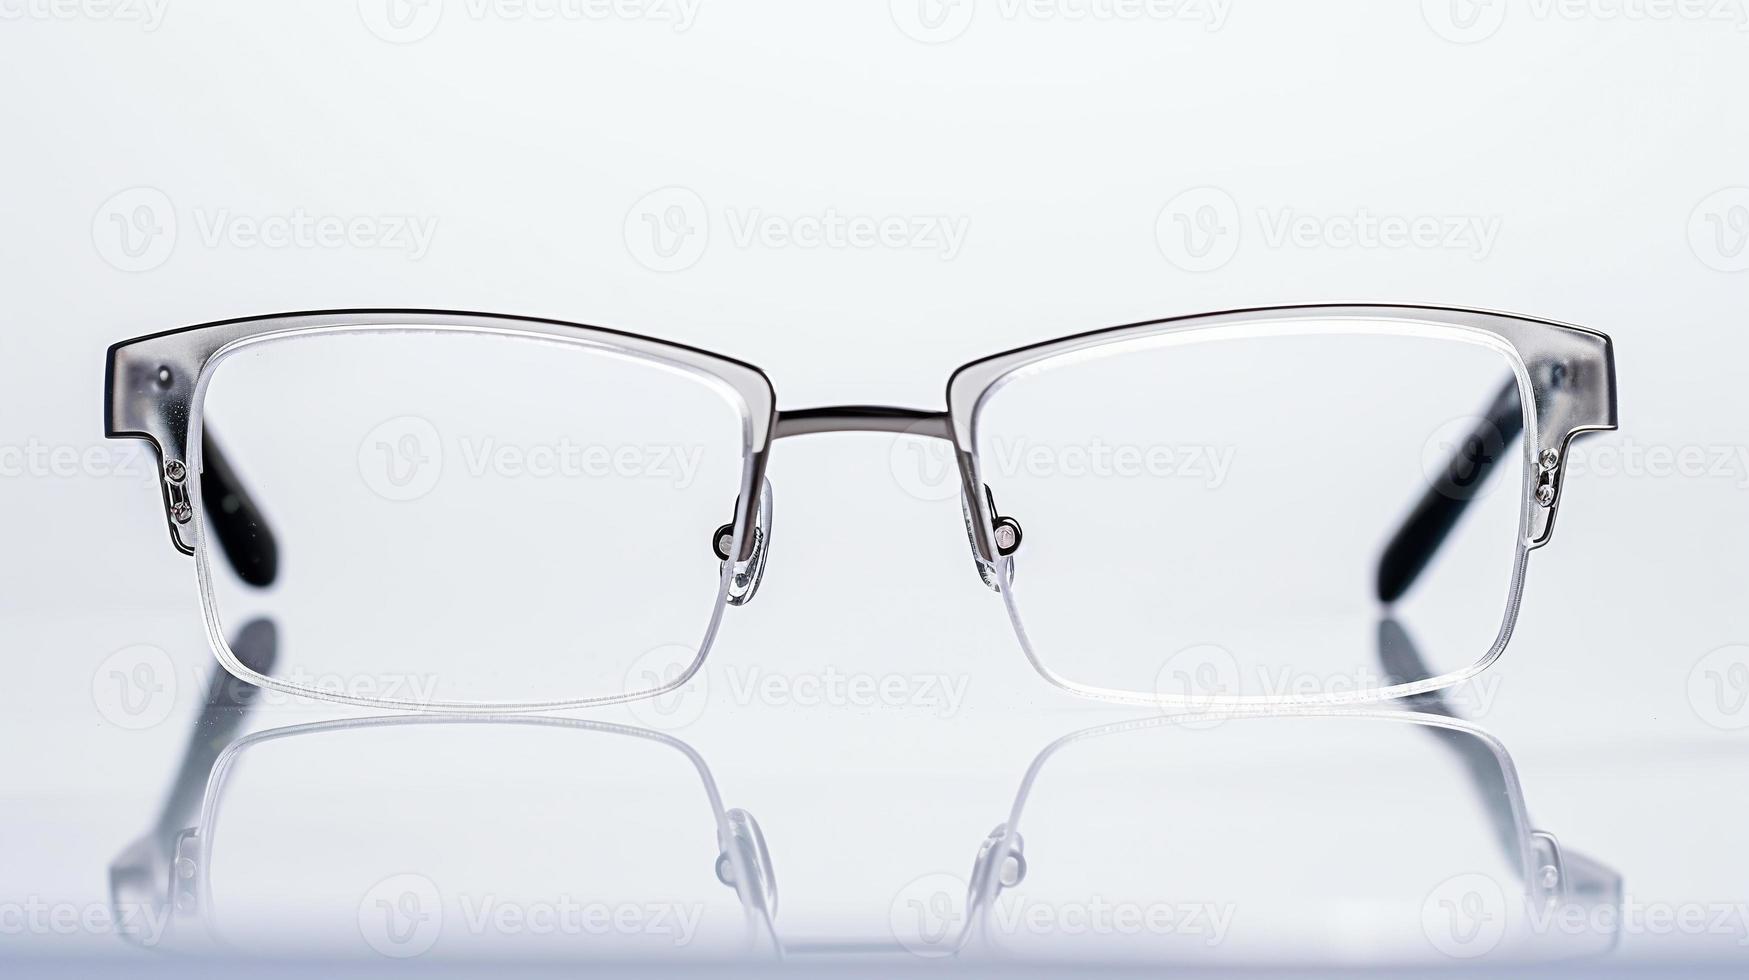 Optical common reading glasses isolated on white background. photo